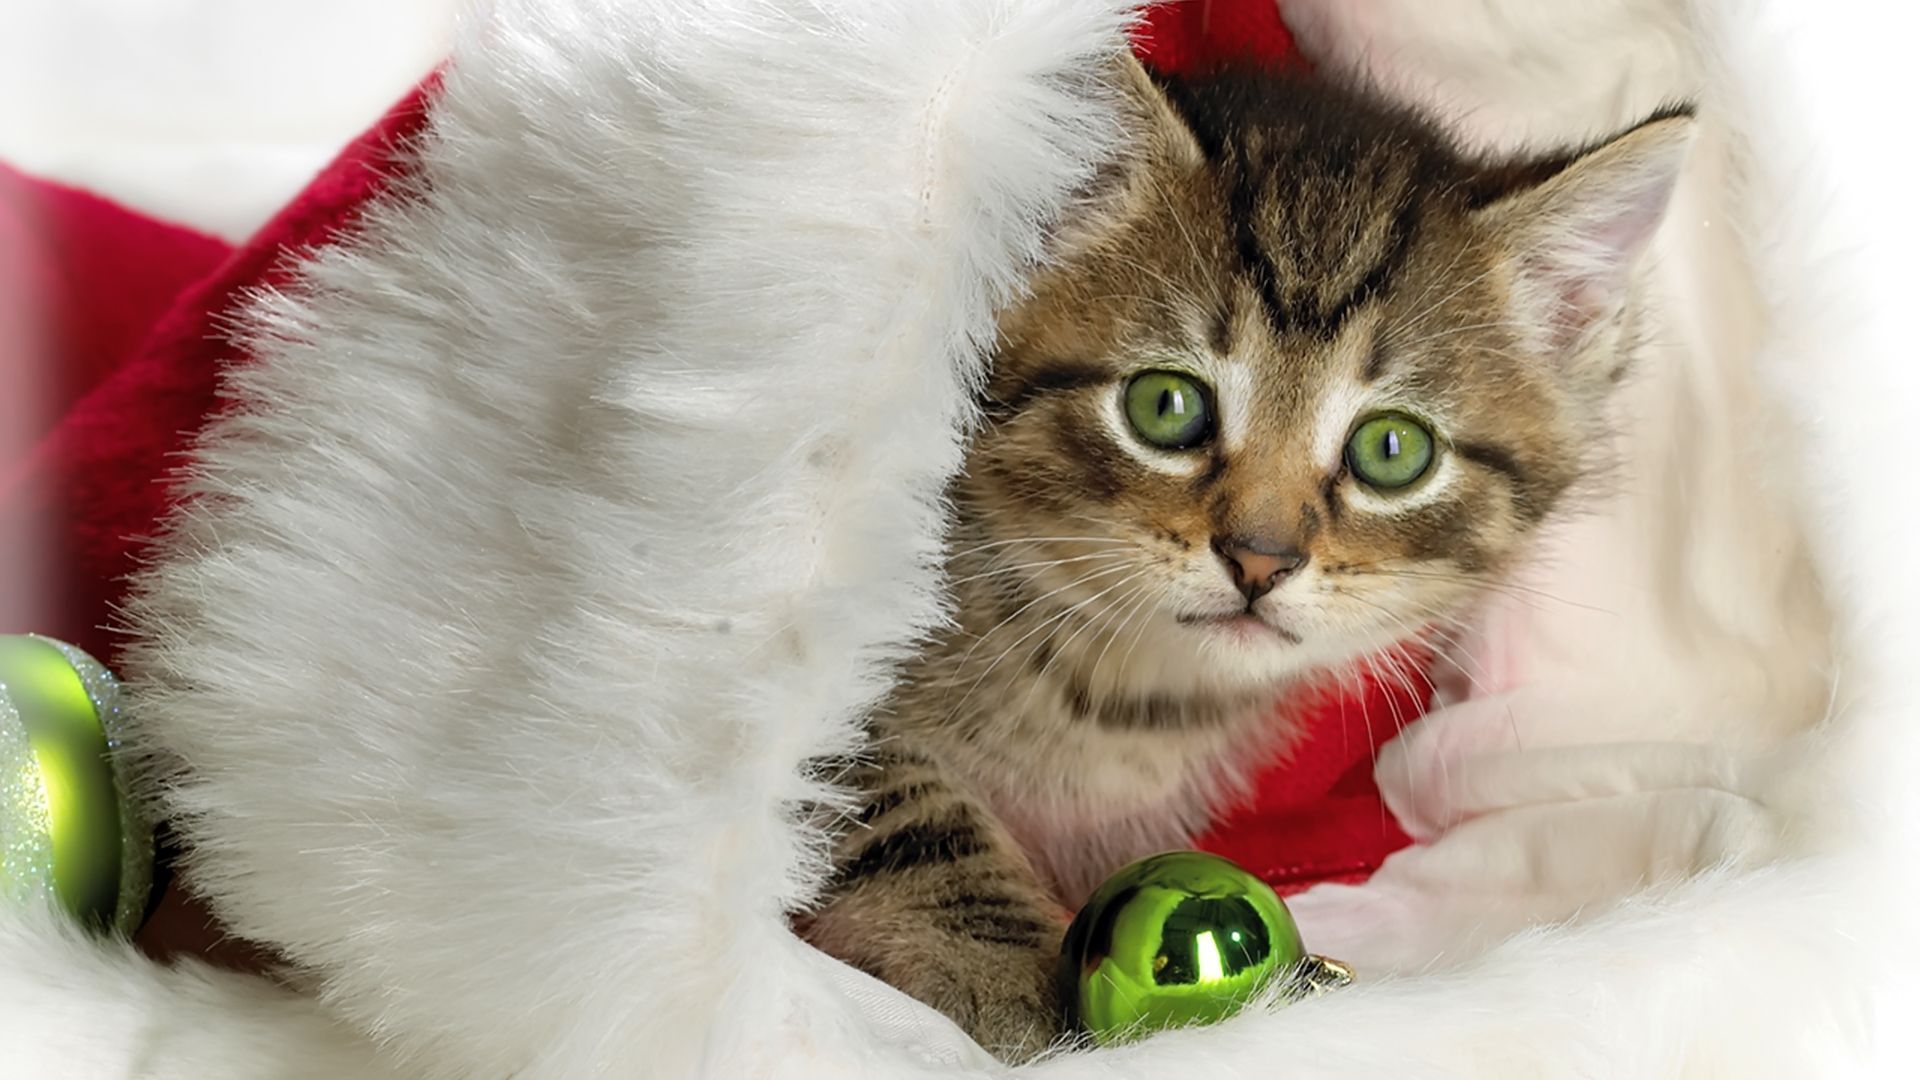 Cute Cat & Kitten Picture. Christmas kitten, Christmas cats, Christmas animals